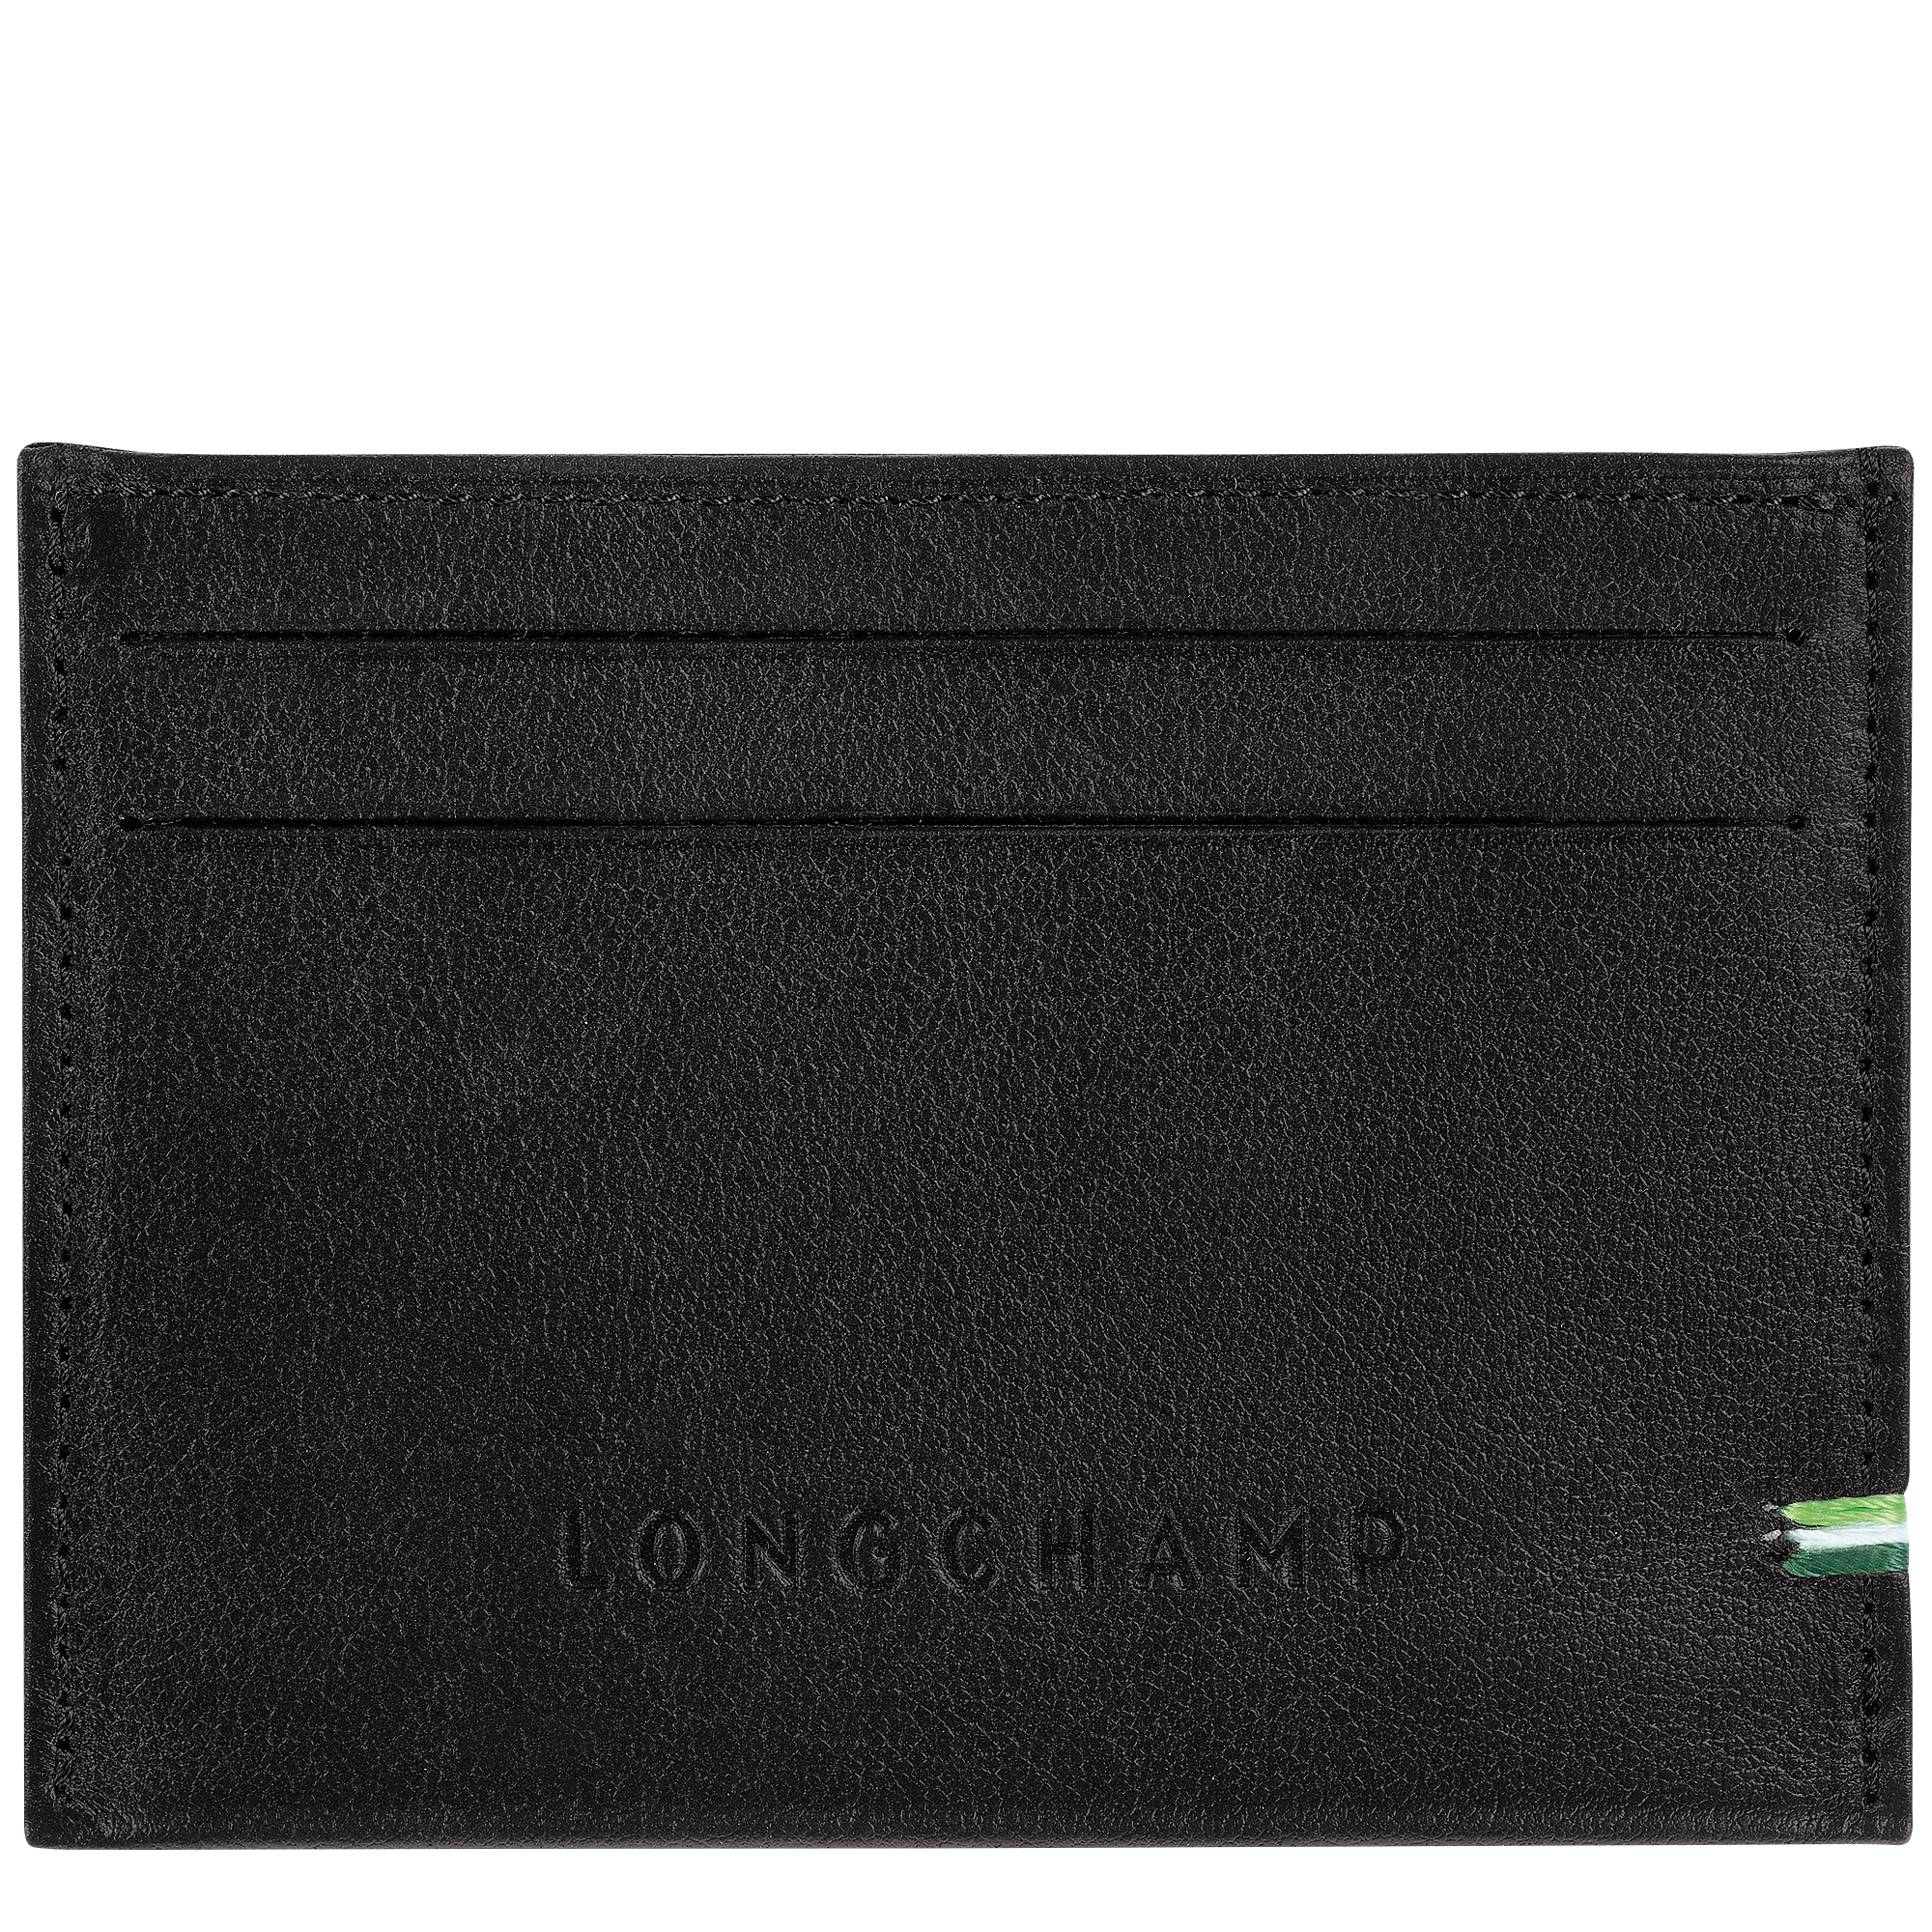 Longchamp sur Seine 卡片夾, 黑色